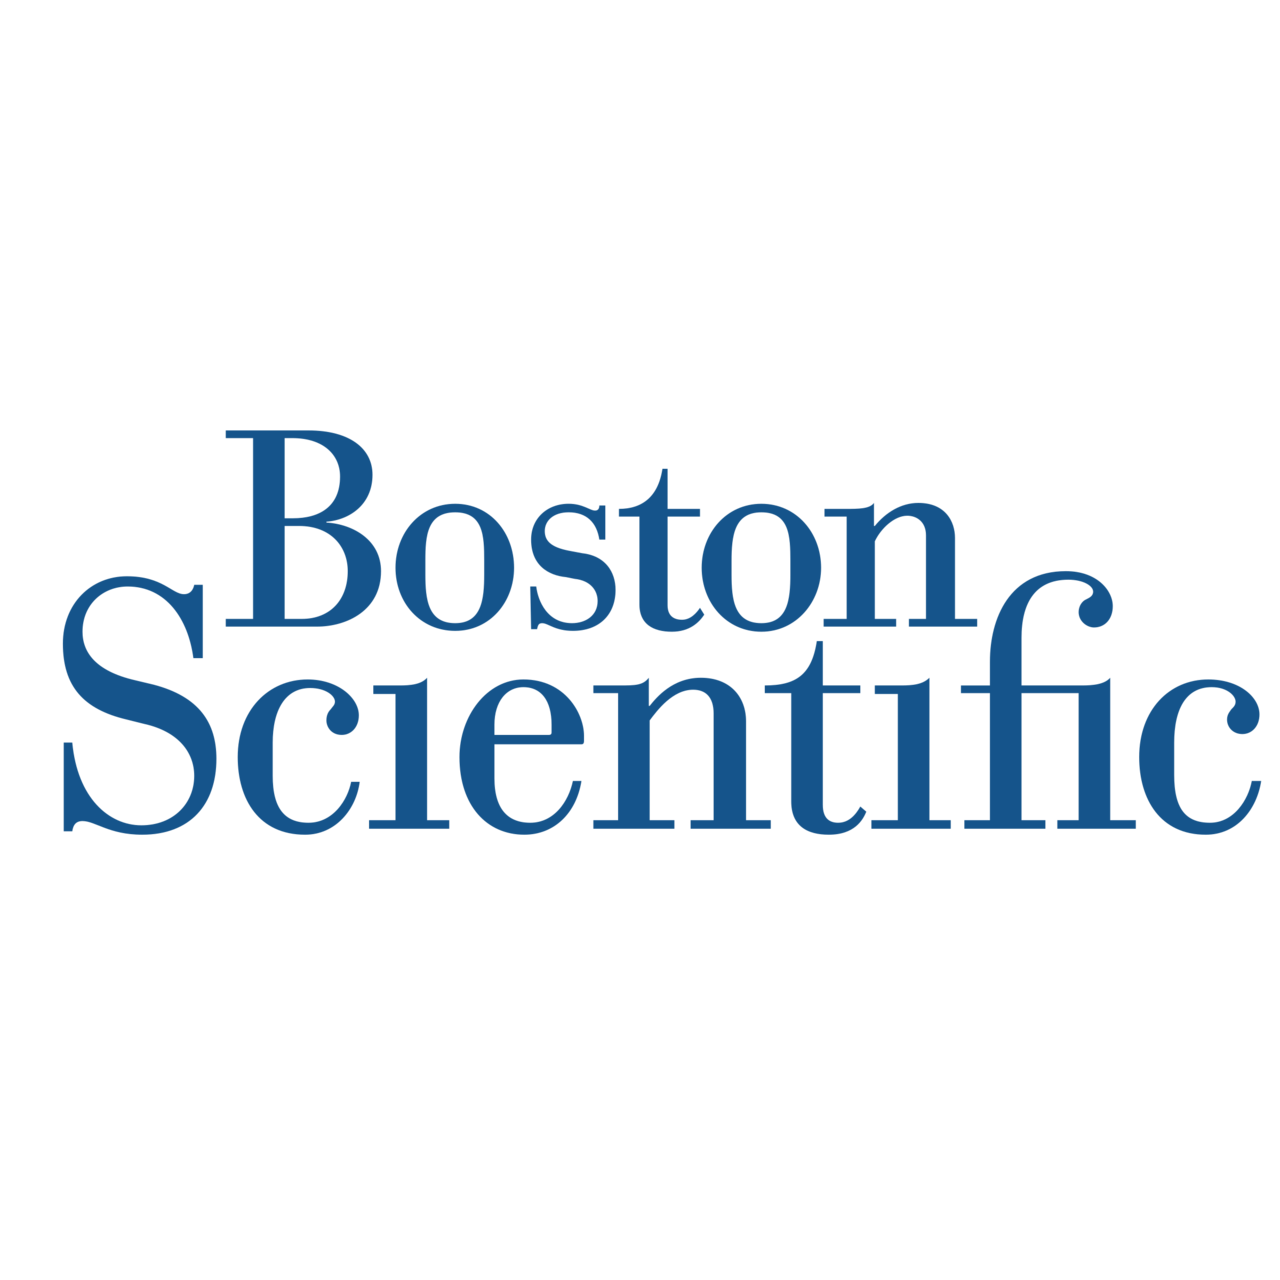 boston-scientific-logo.png